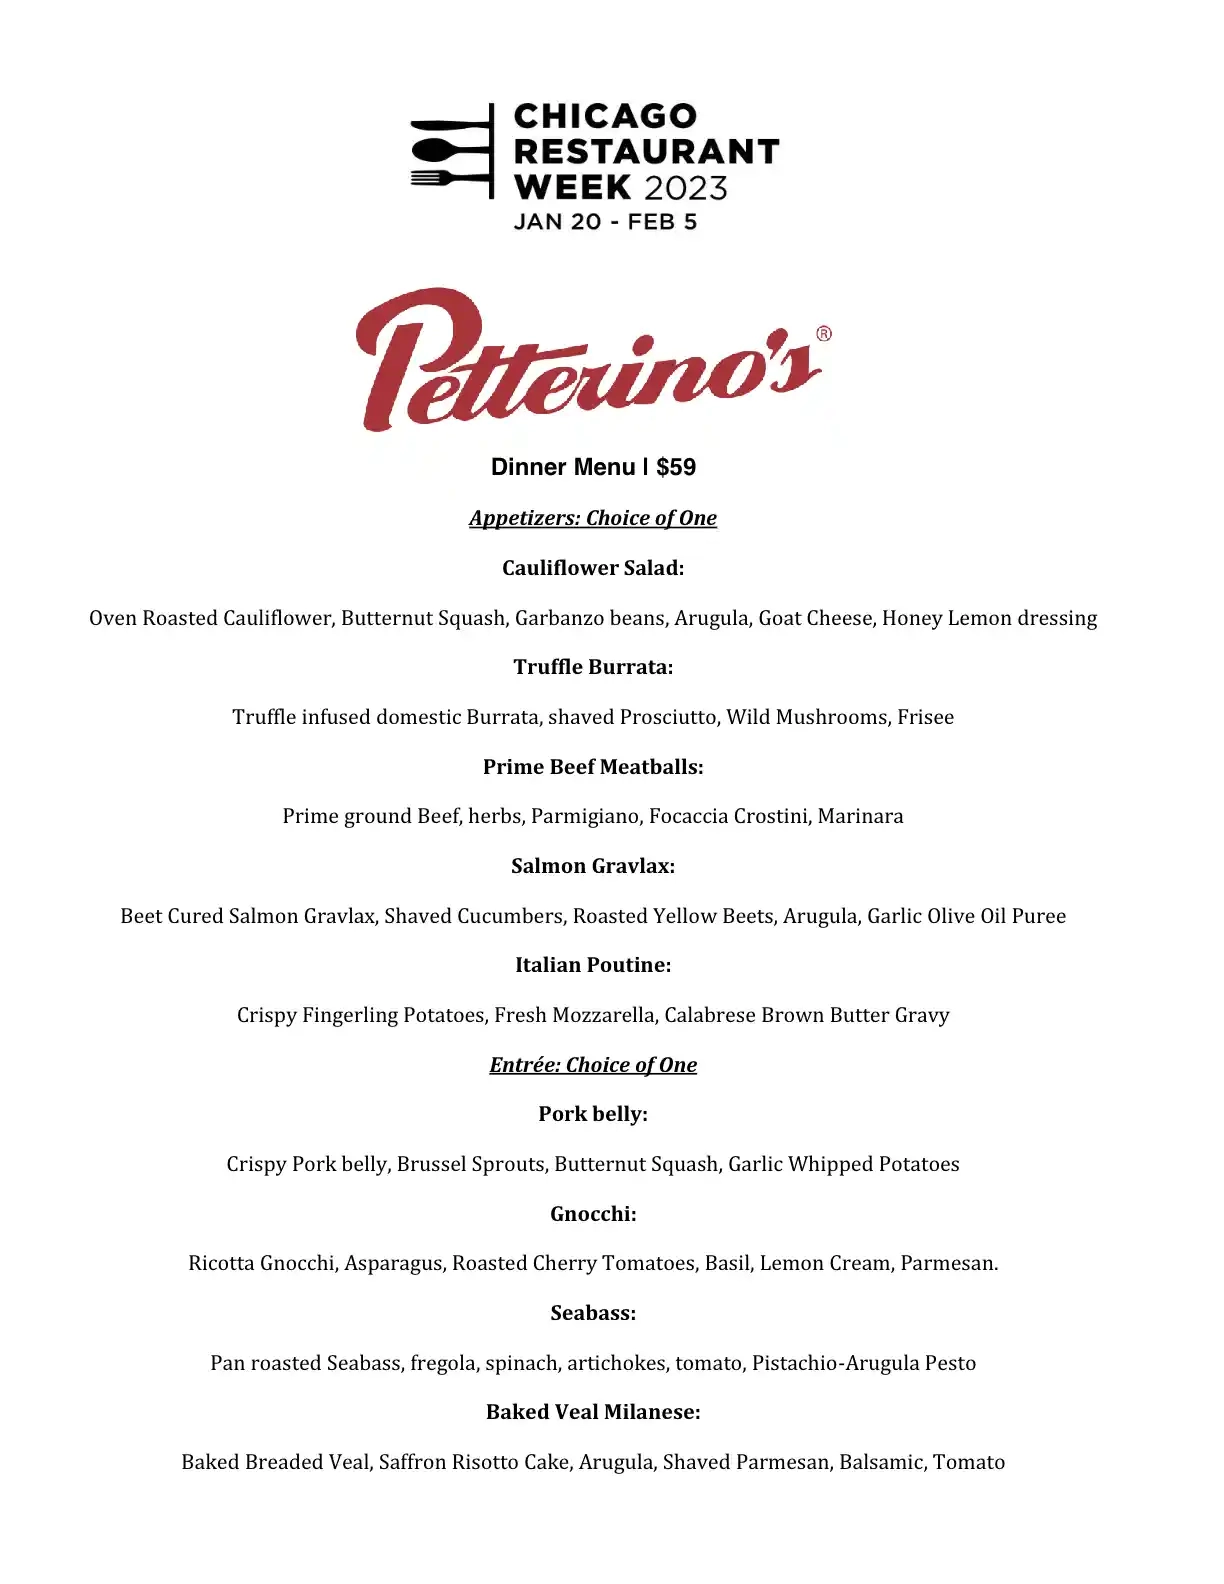 Chicago Restaurant Week 2023 Menu Petterinos Dinner